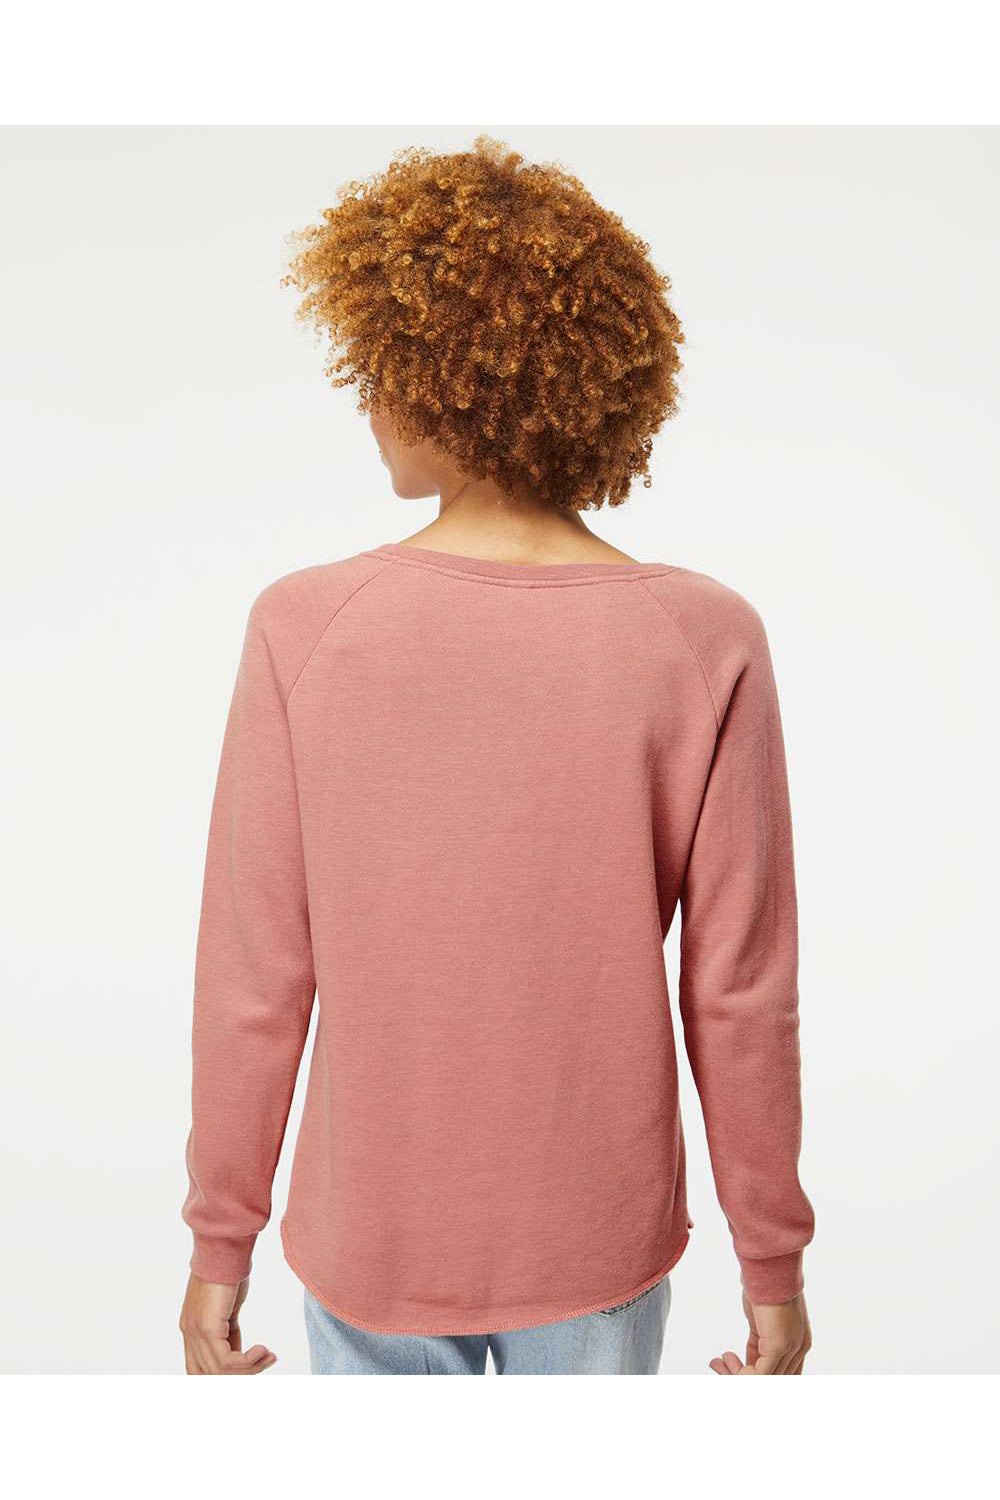 Independent Trading Co. PRM2000 Womens California Wave Wash Crewneck Sweatshirt Dusty Rose Model Back